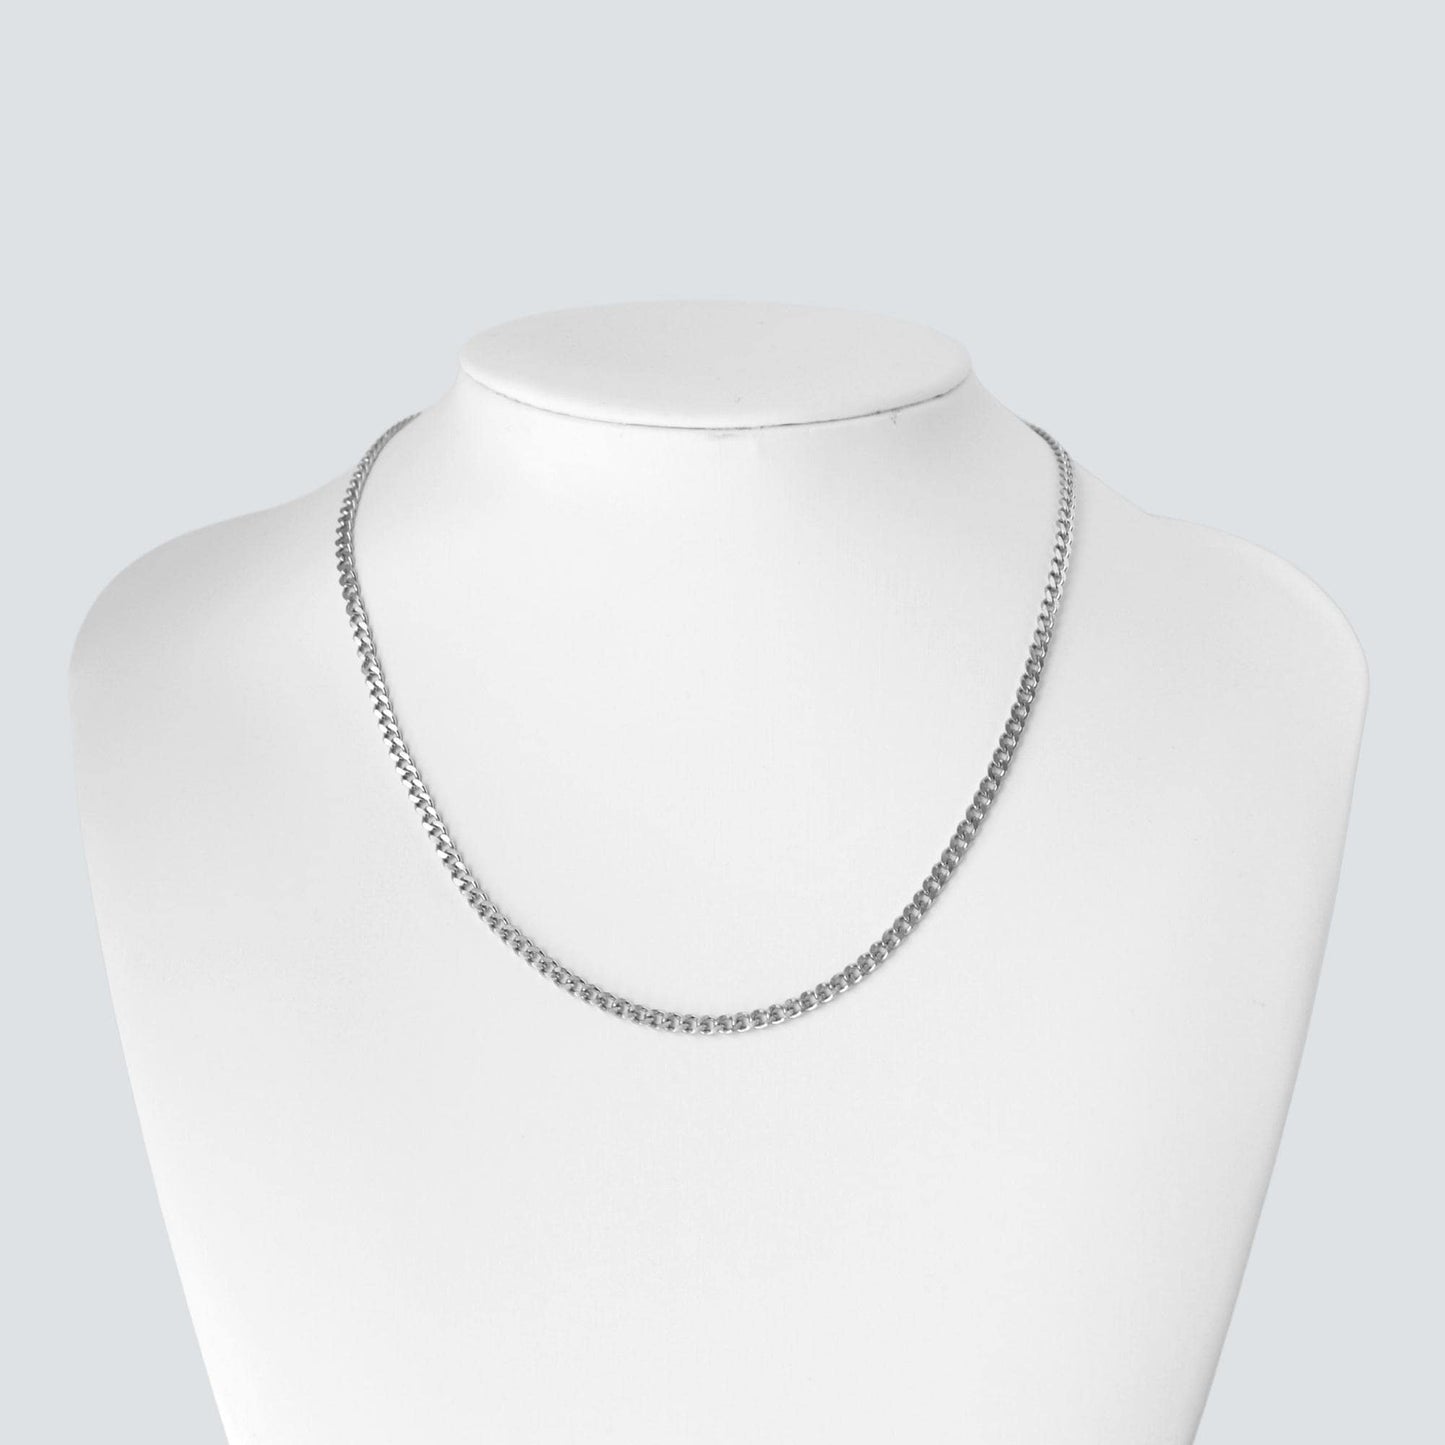 Silver 3mm Cuban Curb Chain Necklace For Men or Women - Necklace - Boutique Wear RENN